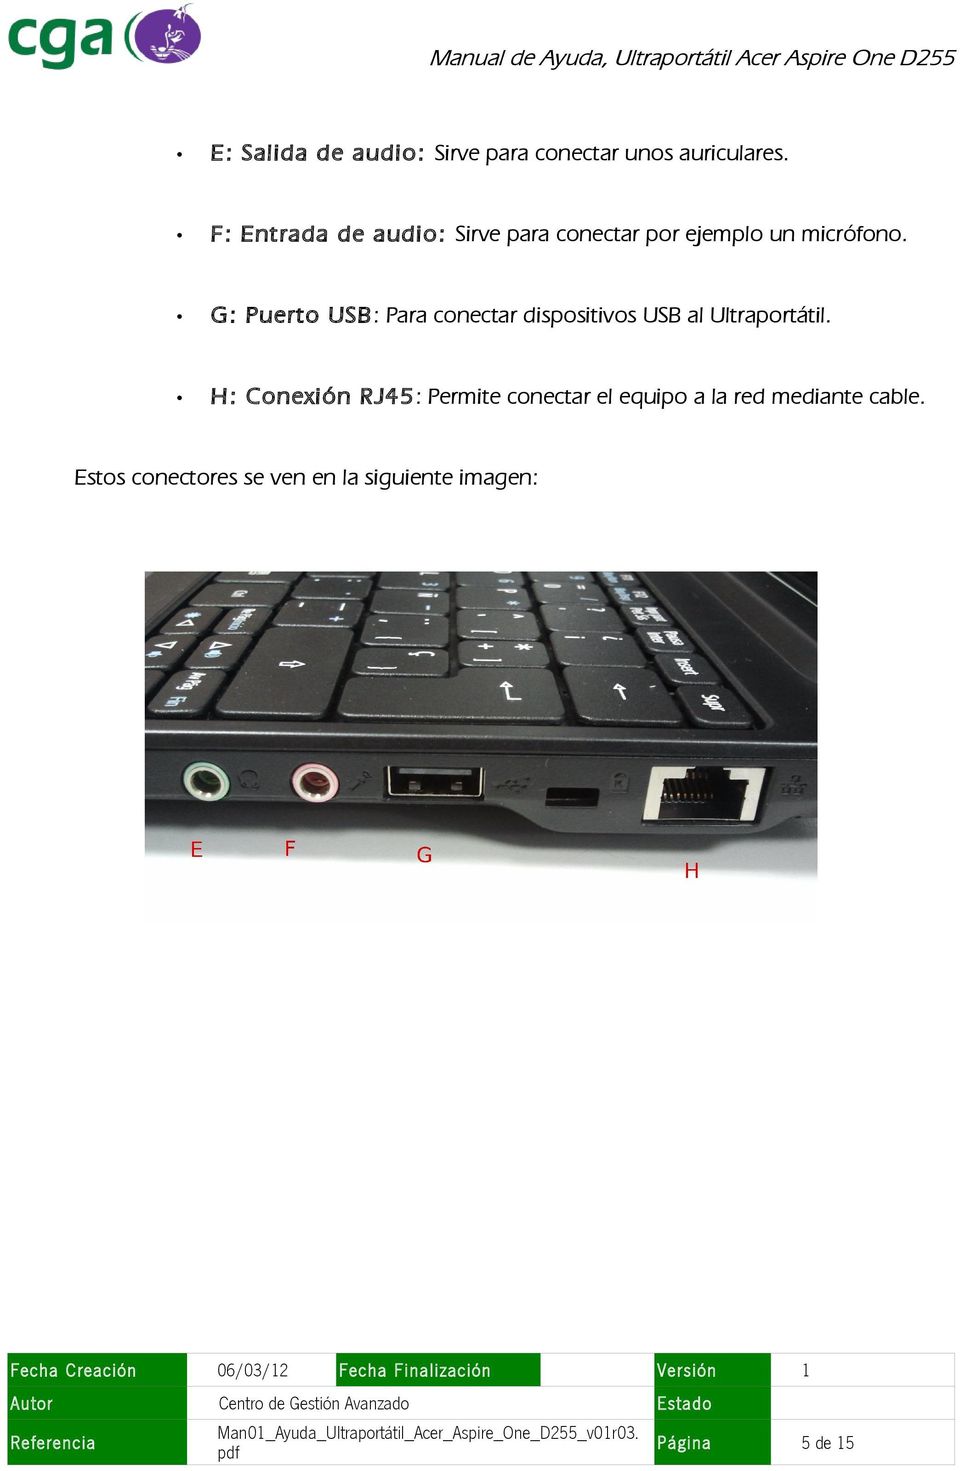 G: Puerto USB: Para conectar dispositivos USB al Ultraportátil.